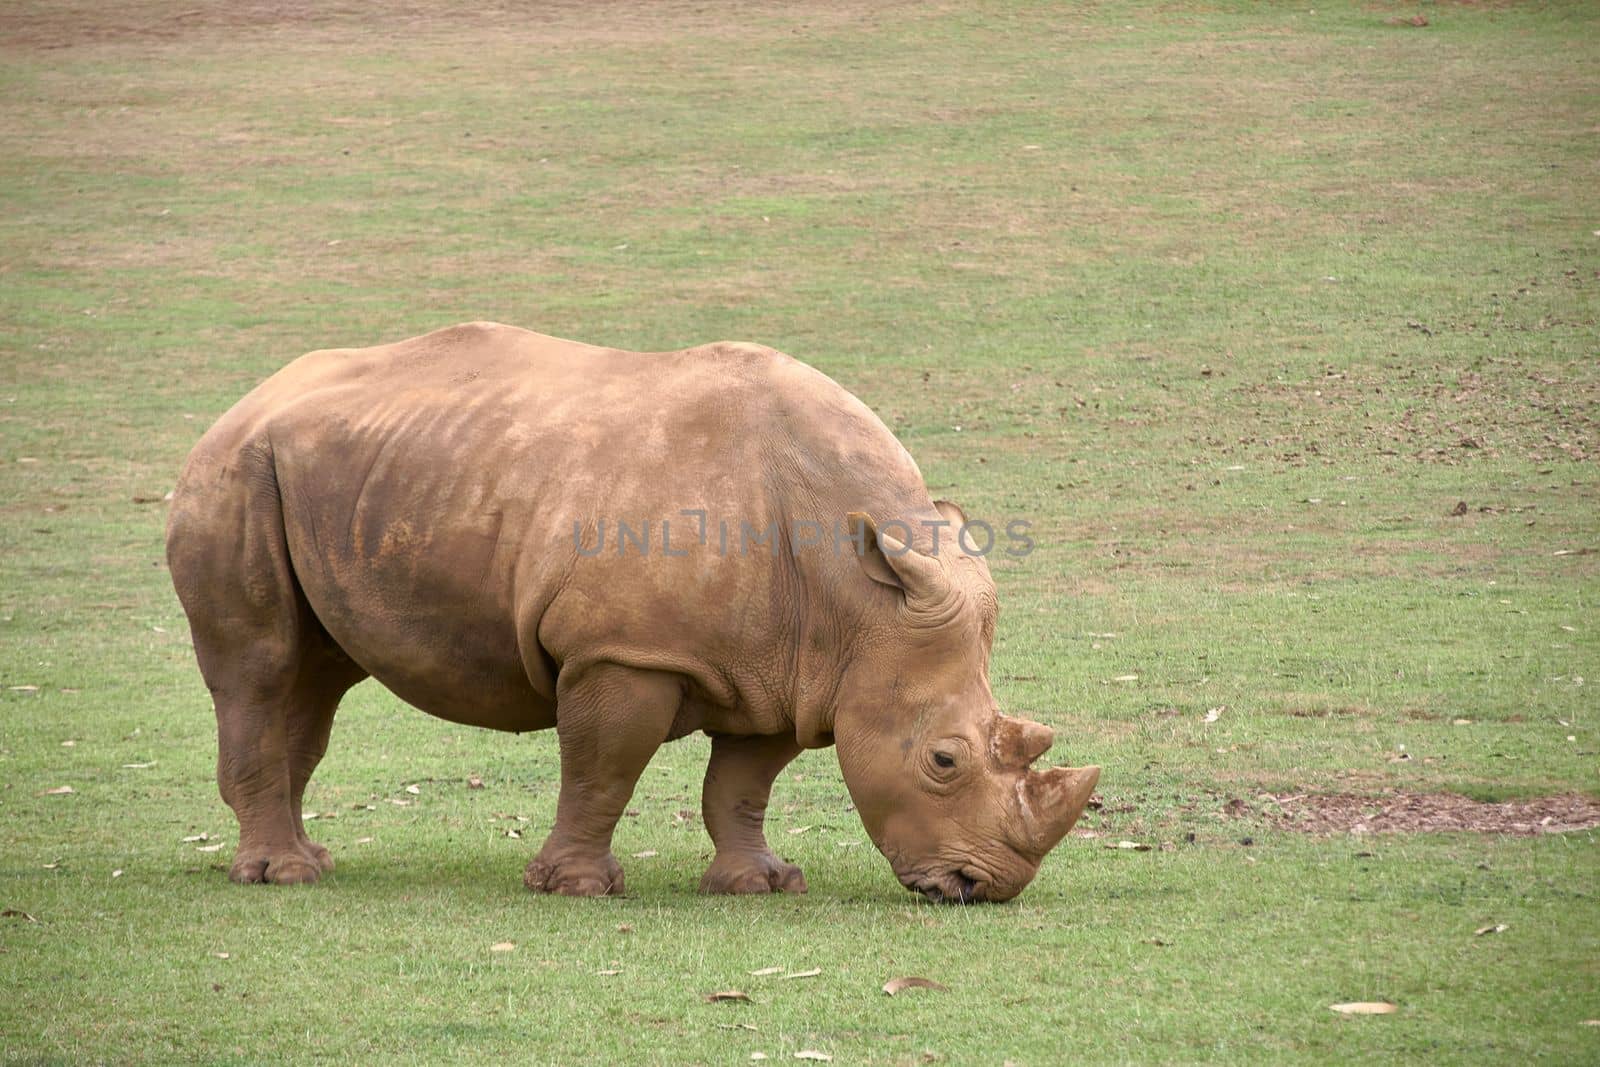 A lone rhino eating grass on the savannah by raul_ruiz